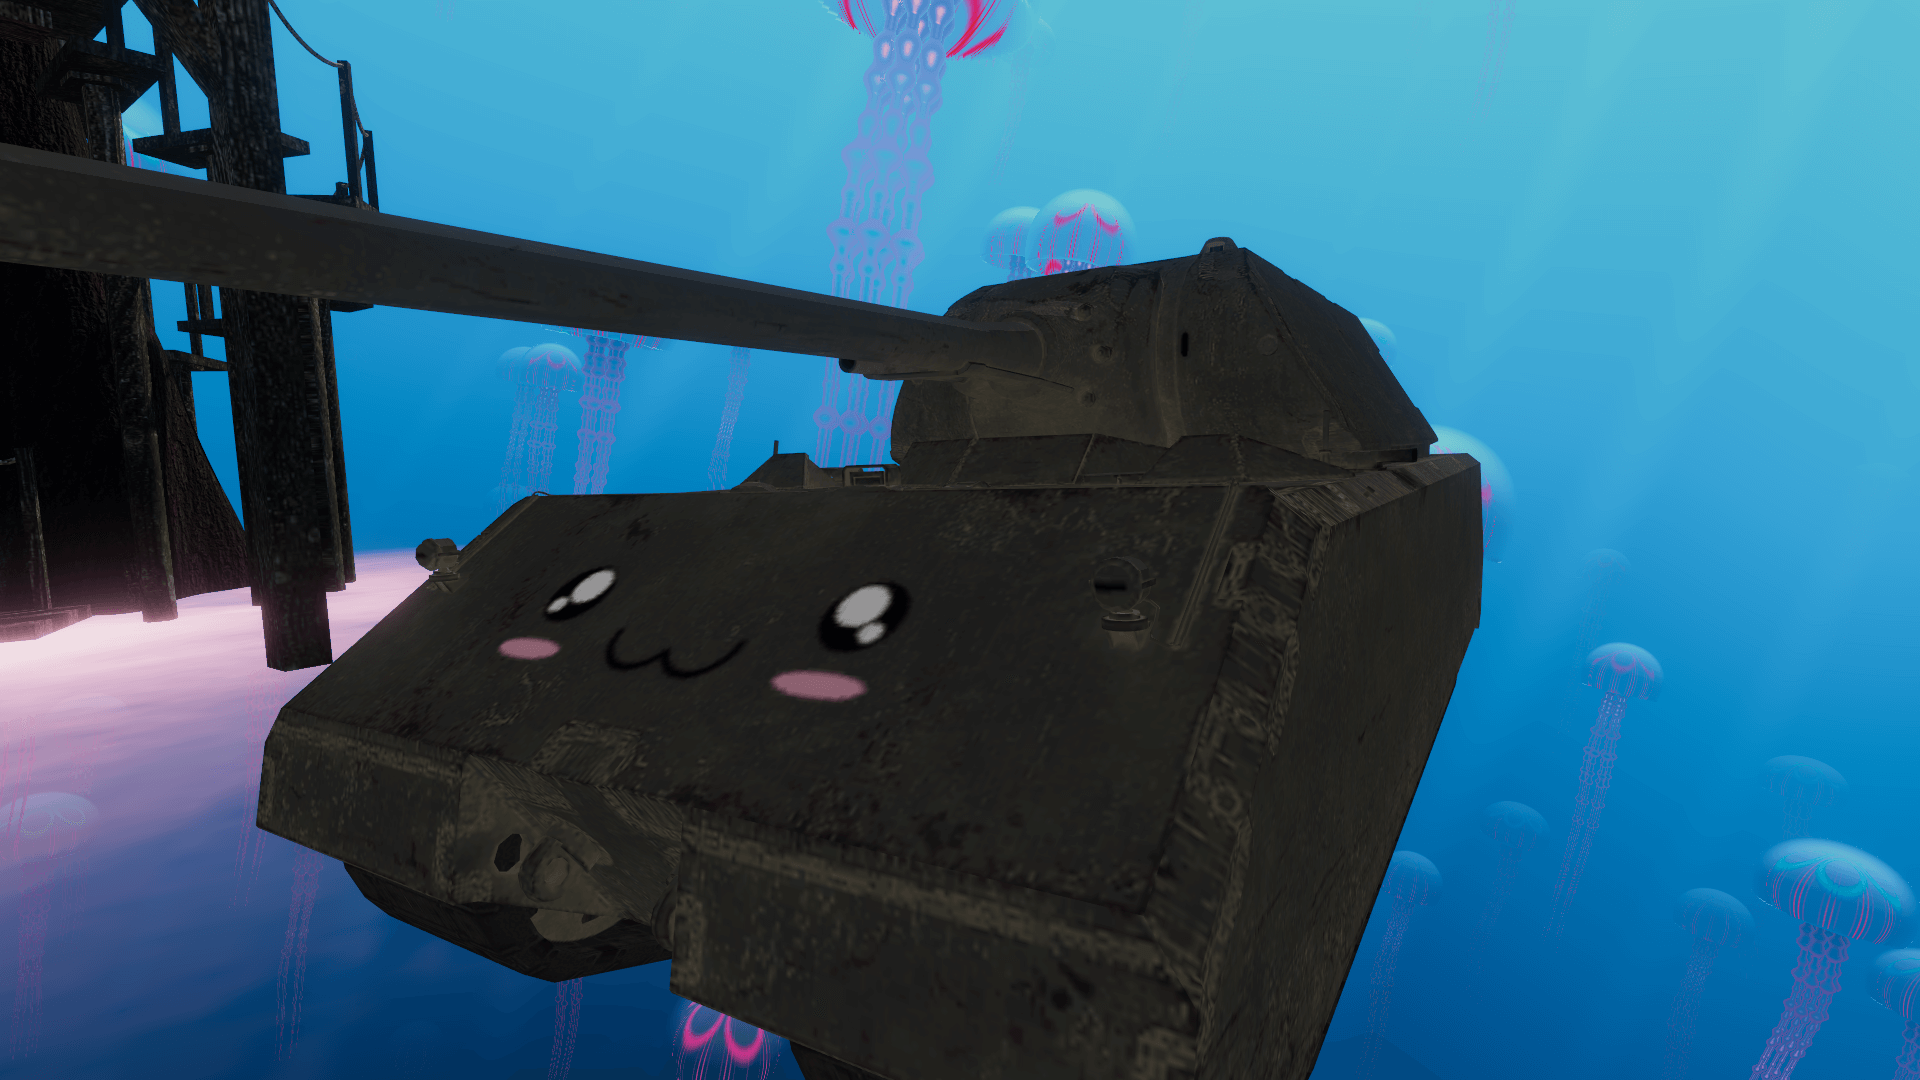 A kawaii tank